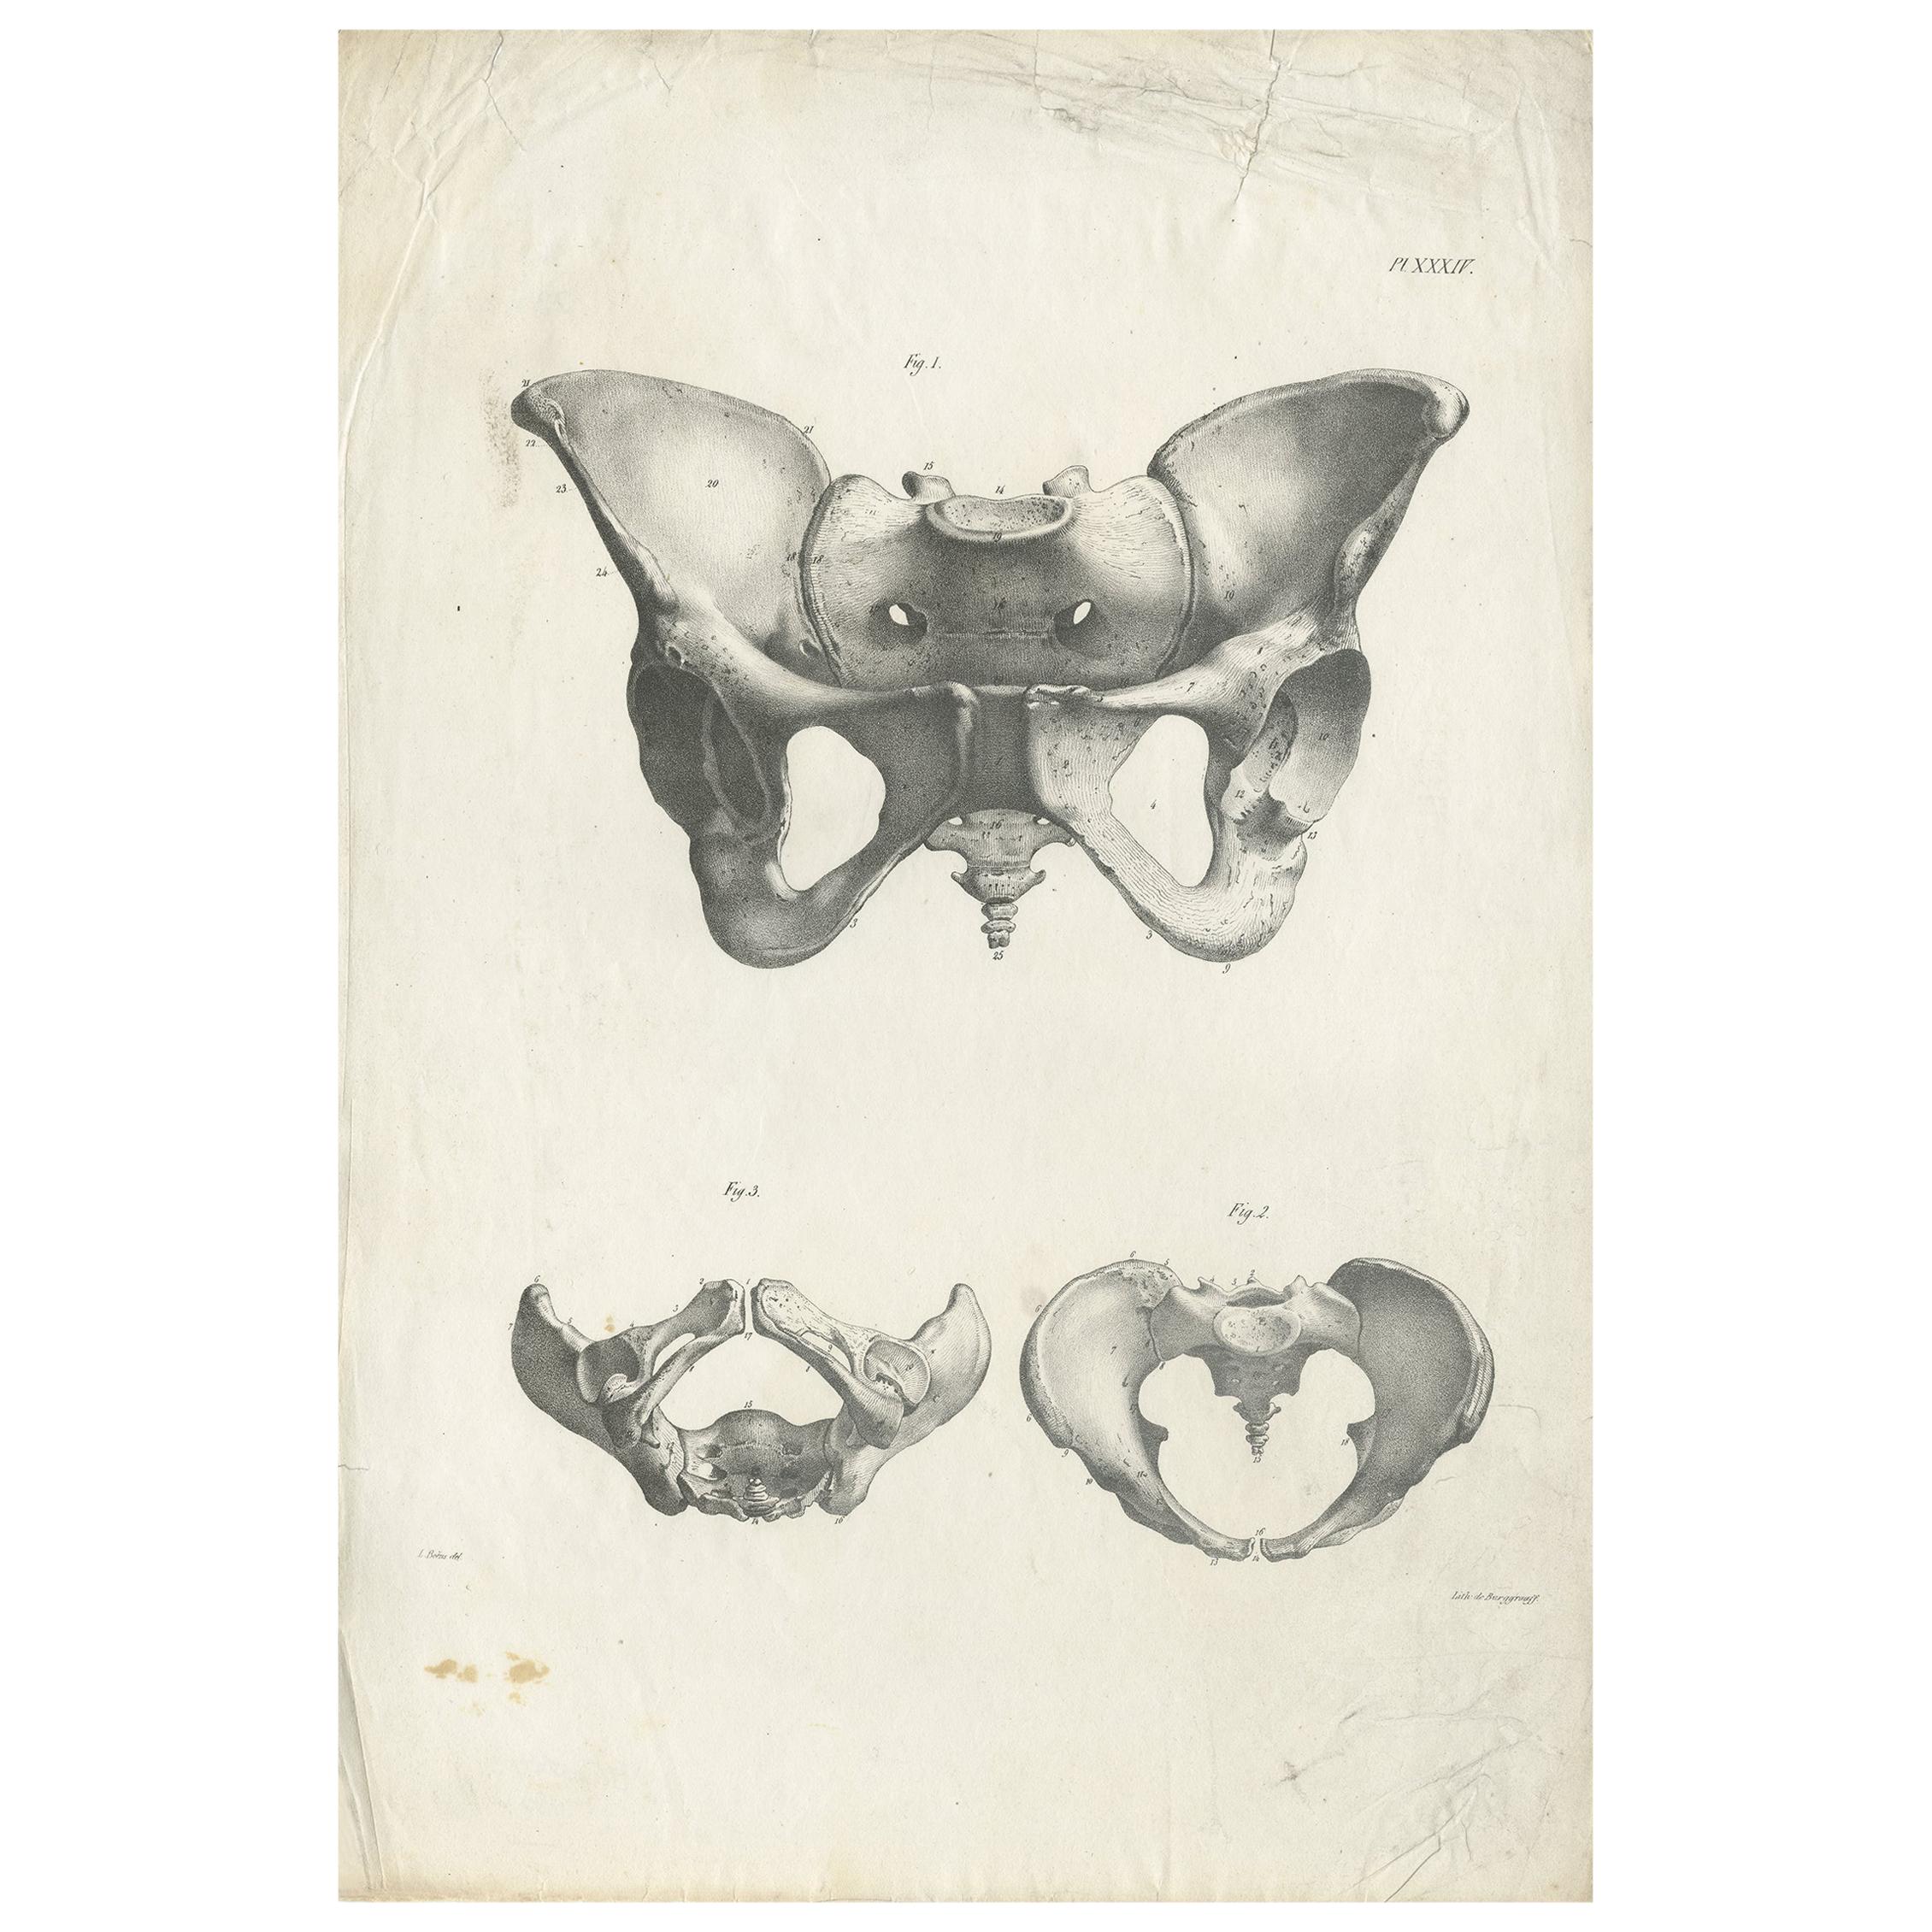 Pl. XXXIV Antique Anatomy / Medical Print of the Pelvis by Cloquet '1821'